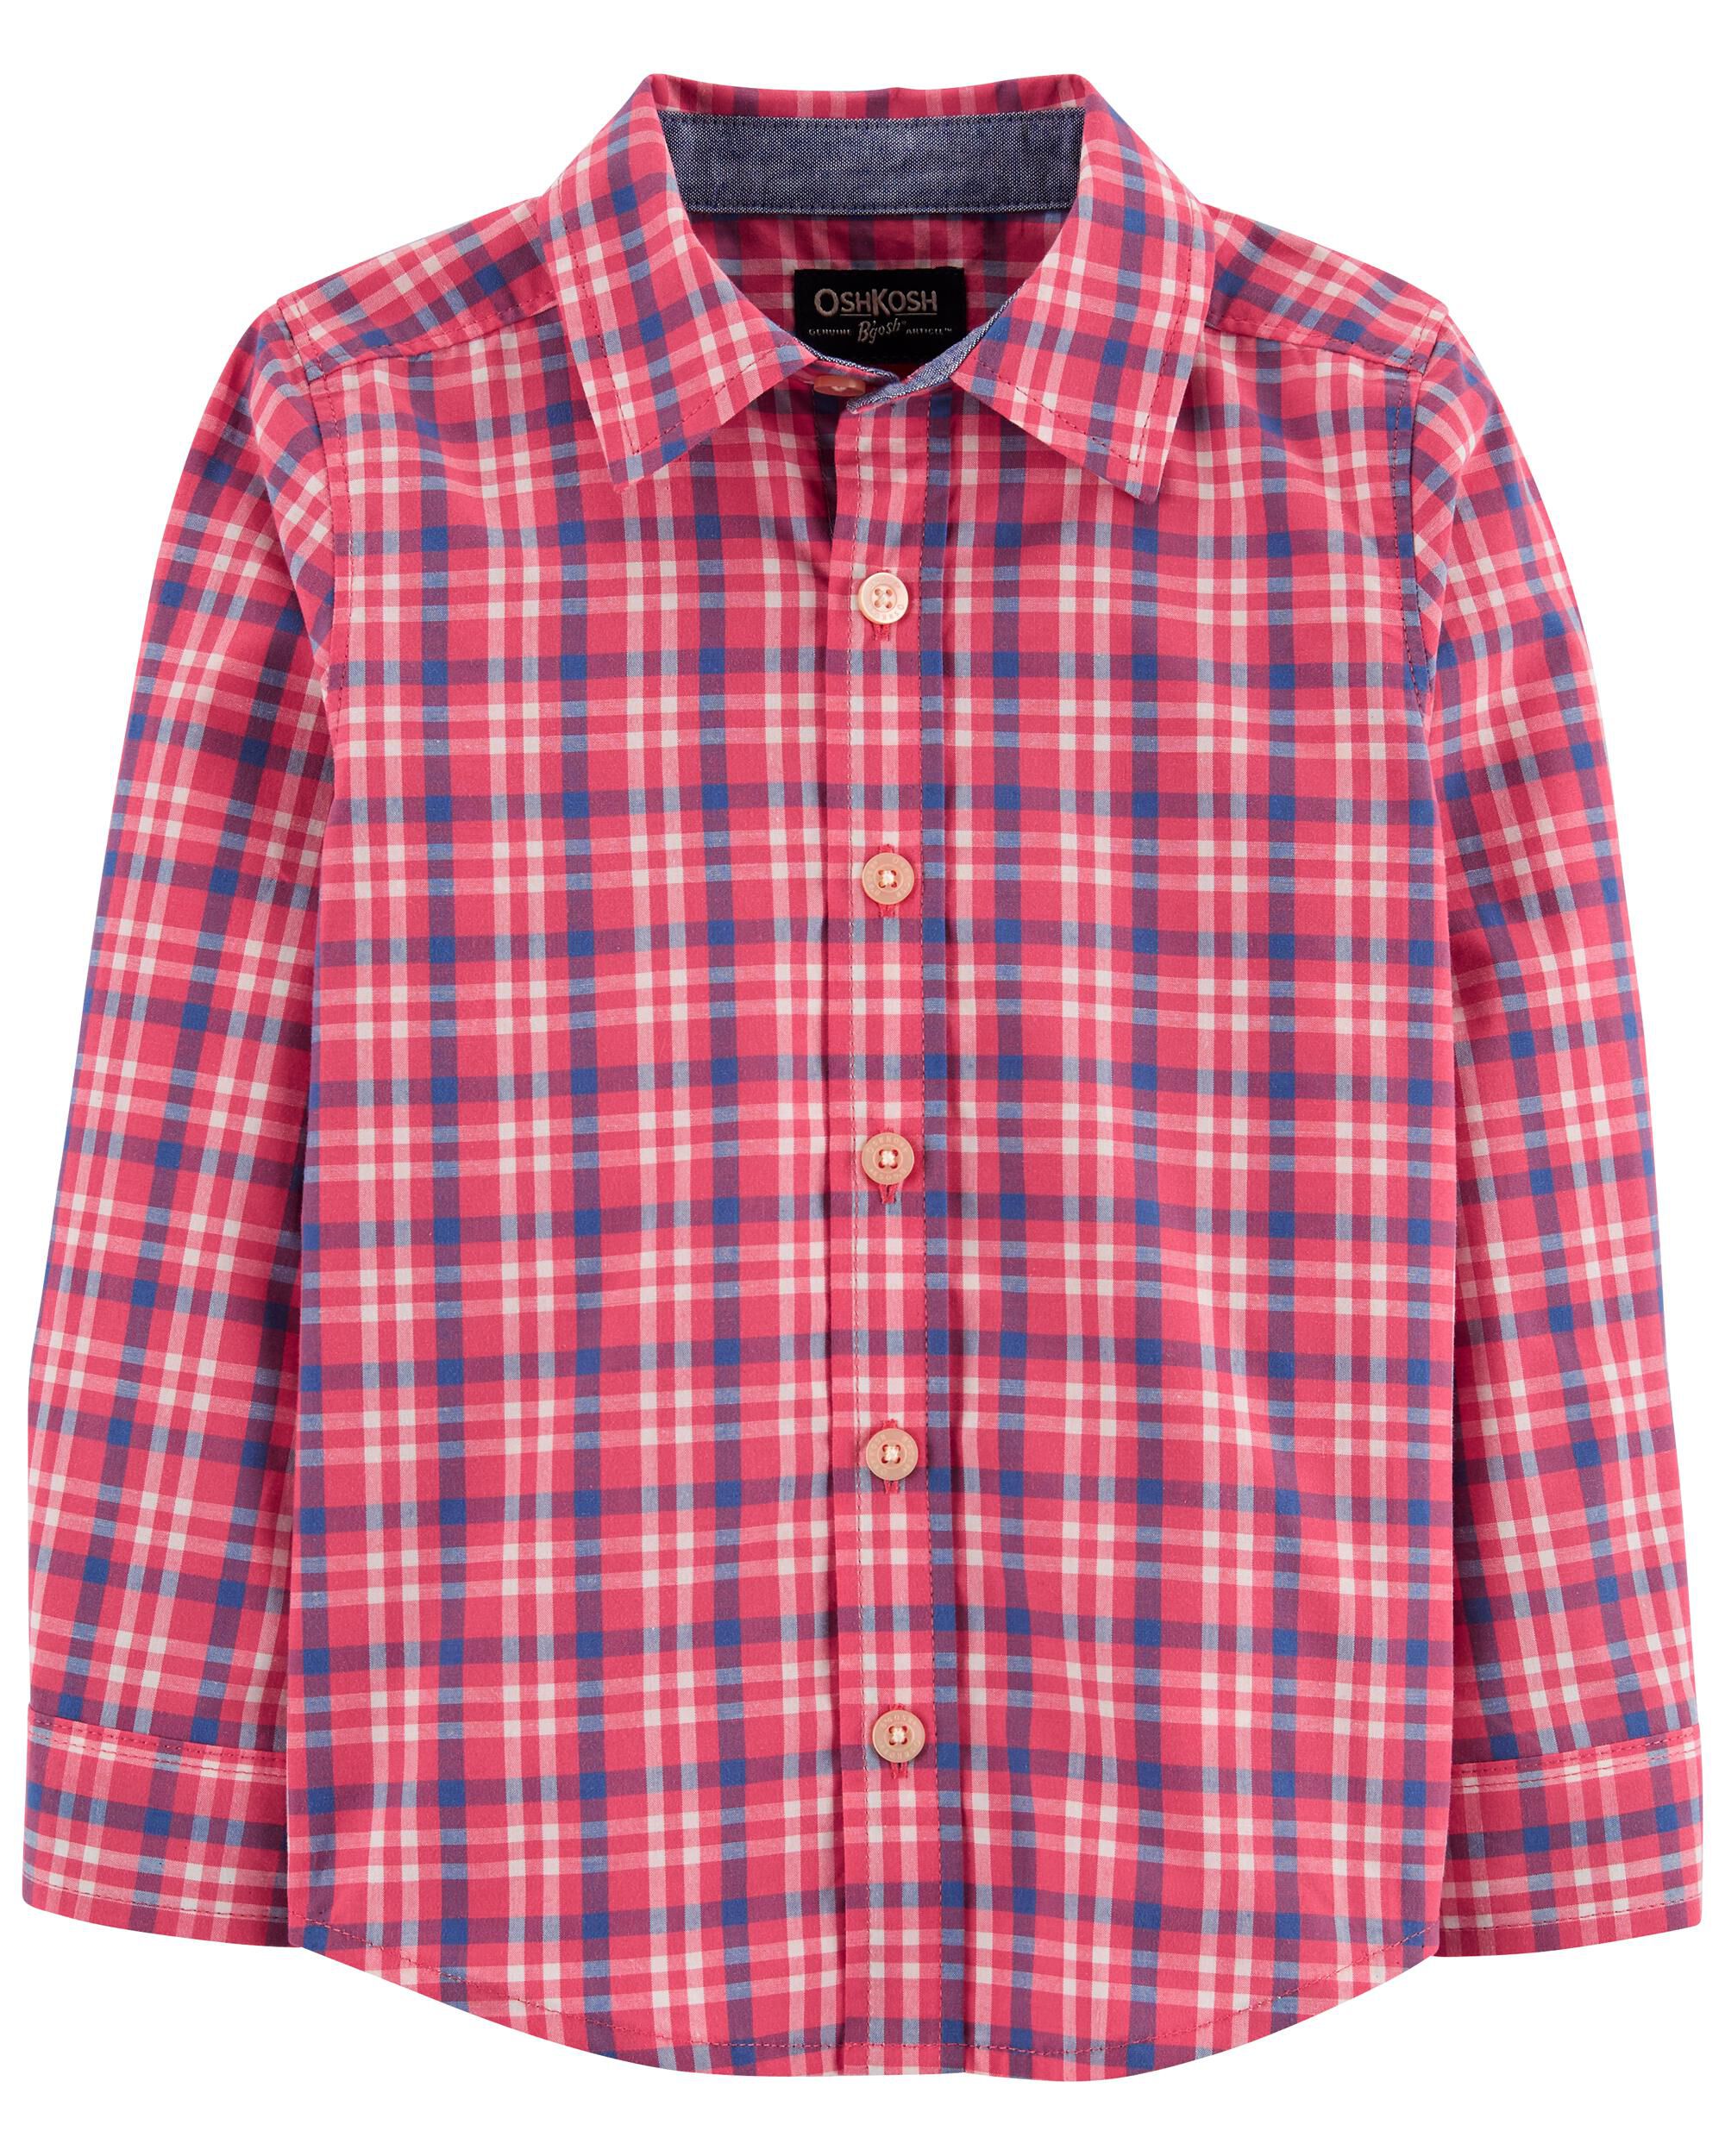 Carters Plaid Button-Front Shirt